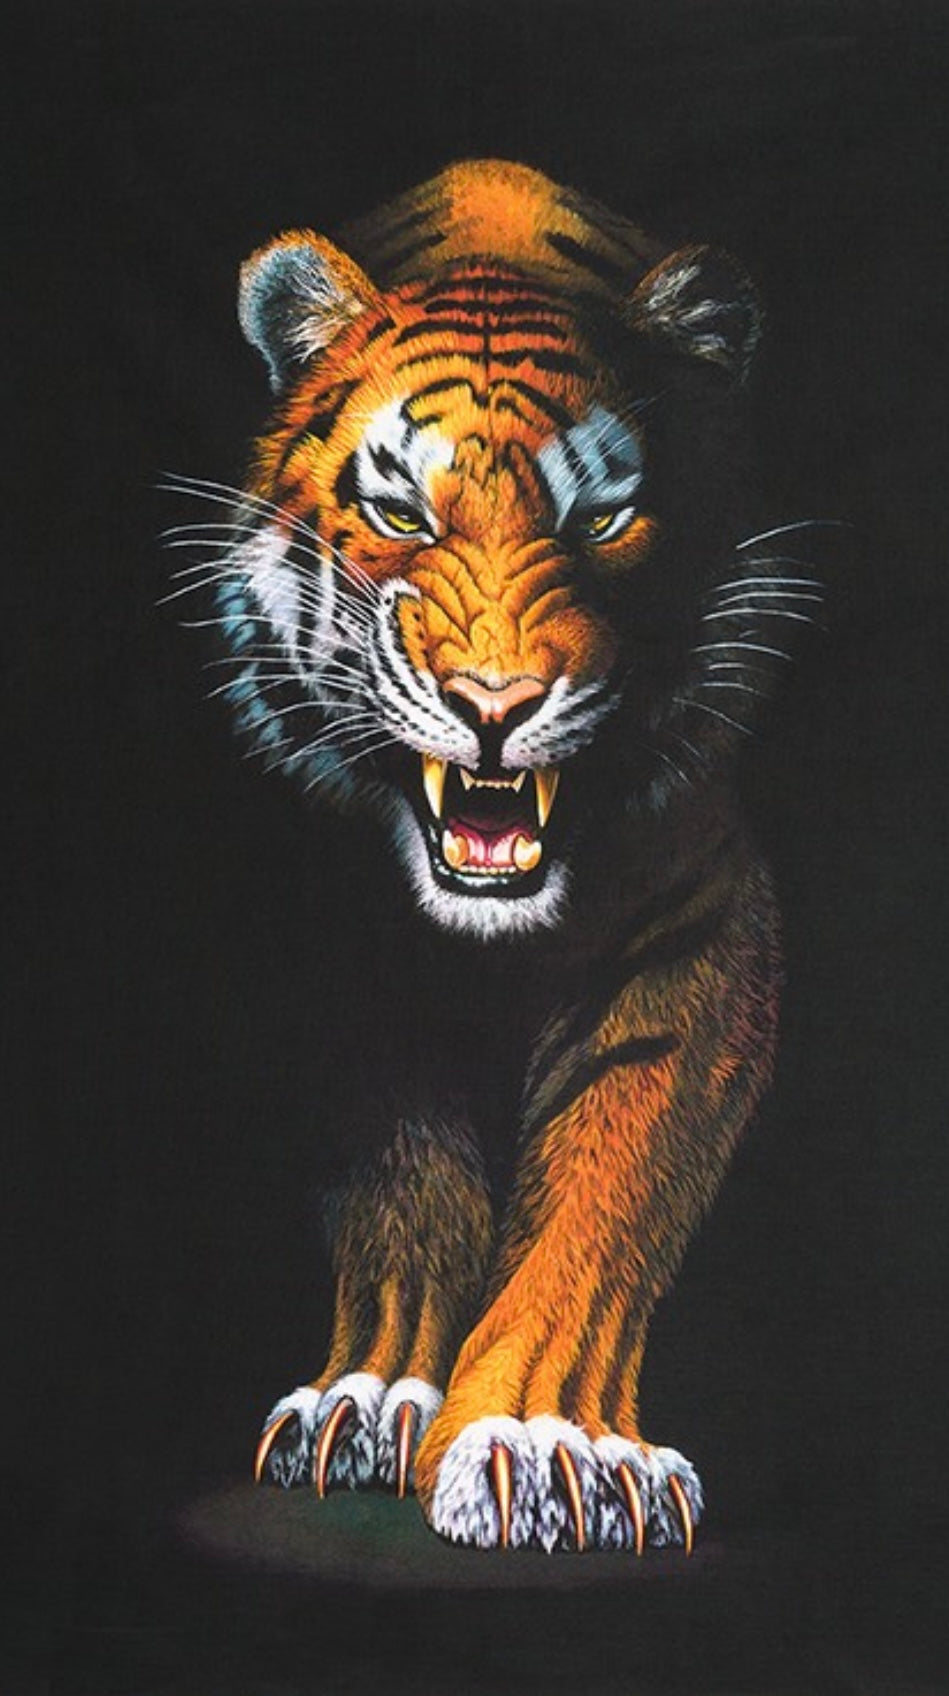 Animal Kingdom - Tiger panel 19870